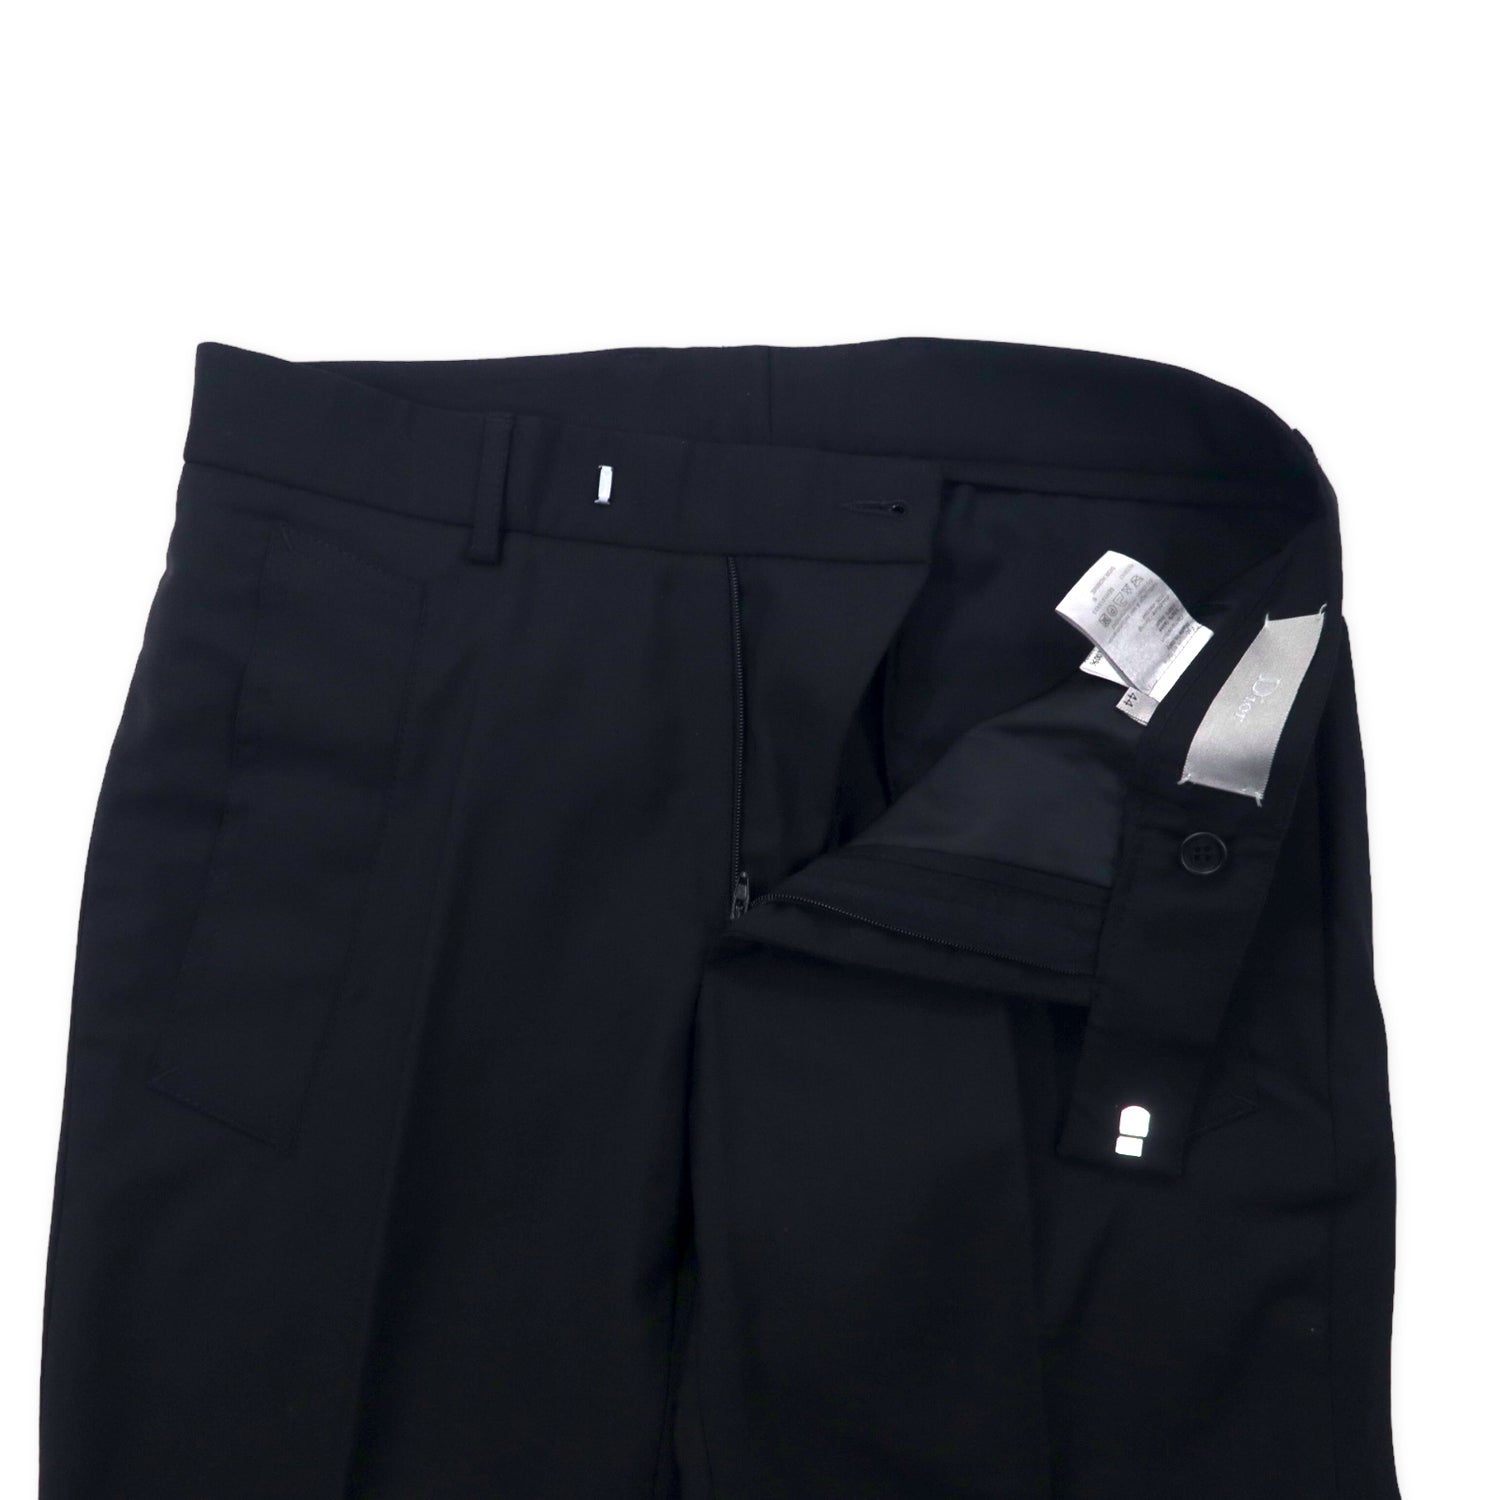 DIOR HOMME Italian MADE Center Press Slacks Pants 44 Black Wool